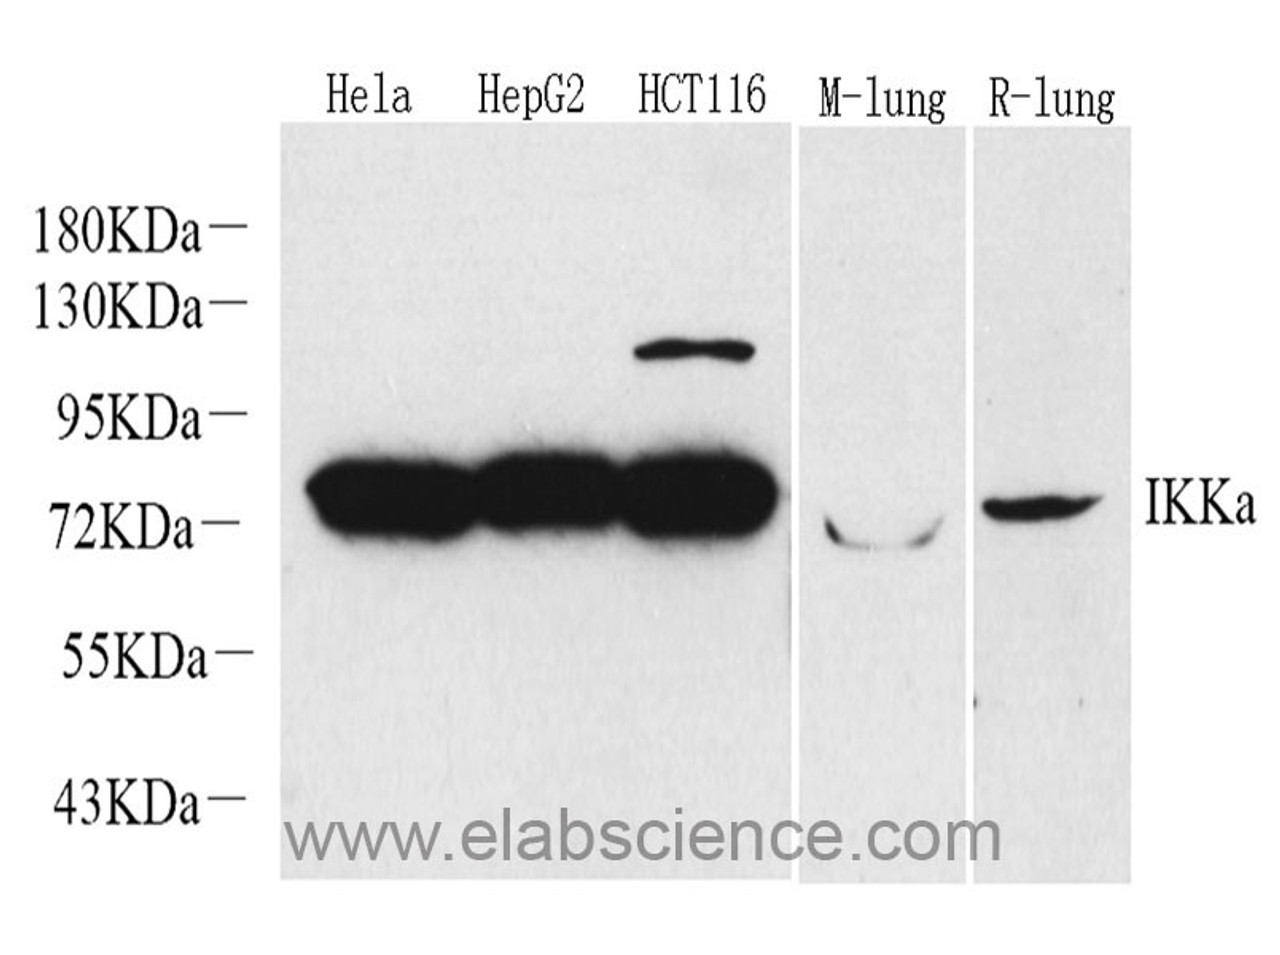 Western Blot analysis of various samples using IKK alpha Polyclonal Antibody at dilution of 1:1000.